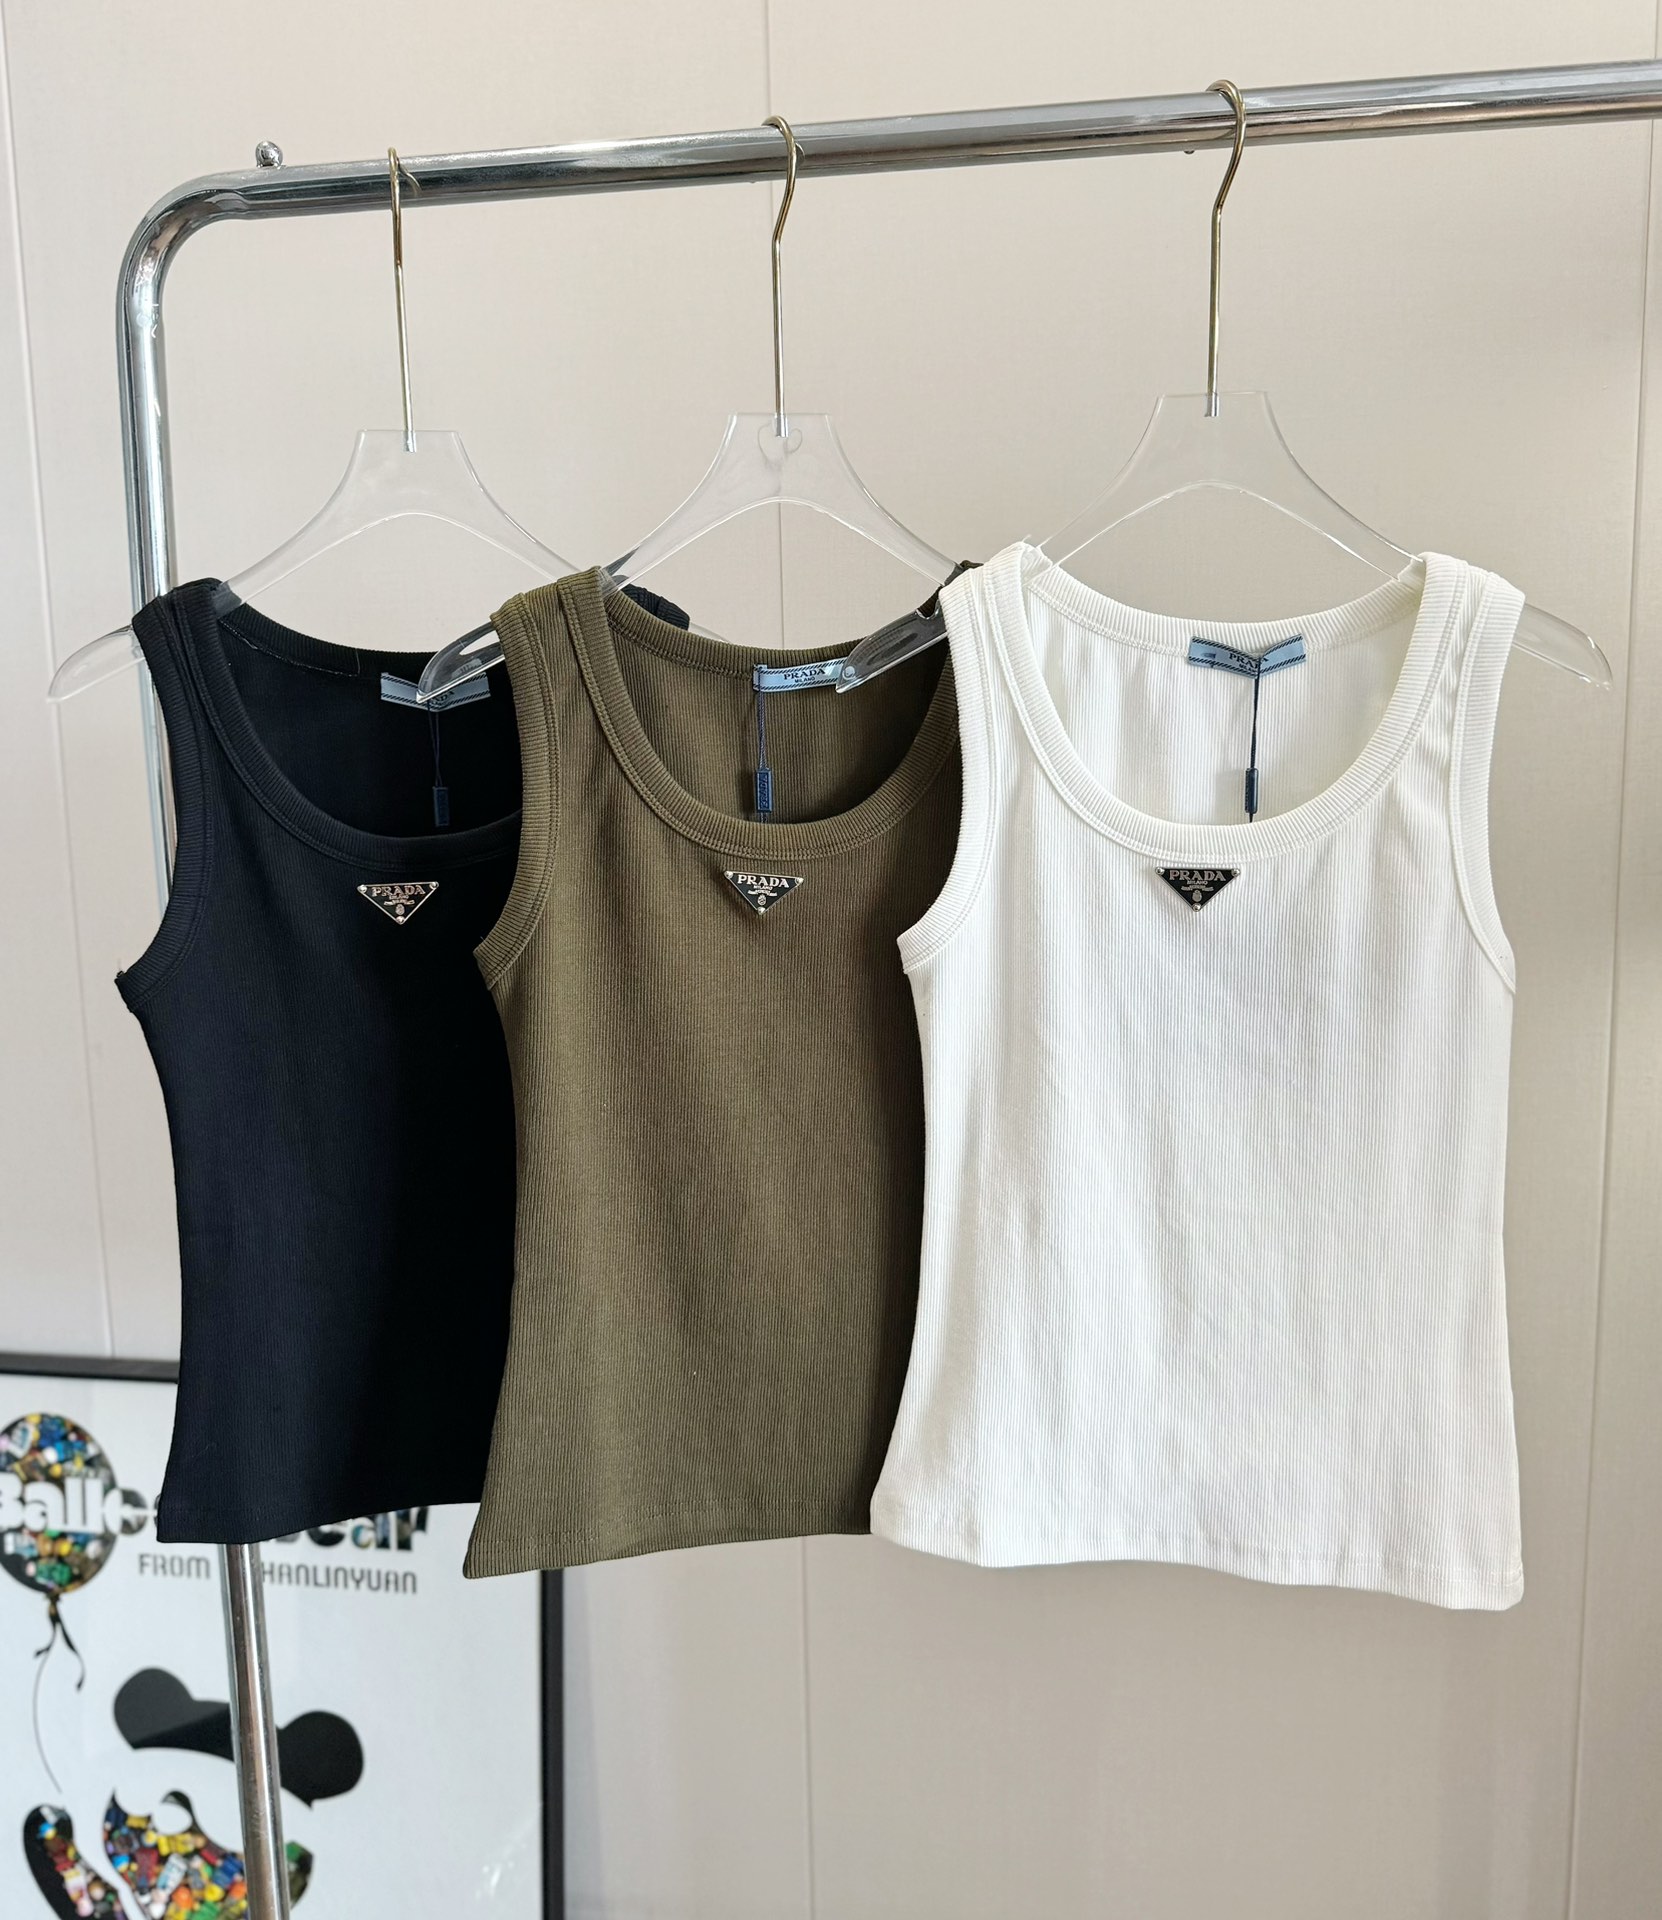 Prada Clothing Tank Tops&Camis Black Green White Knitting Summer Collection